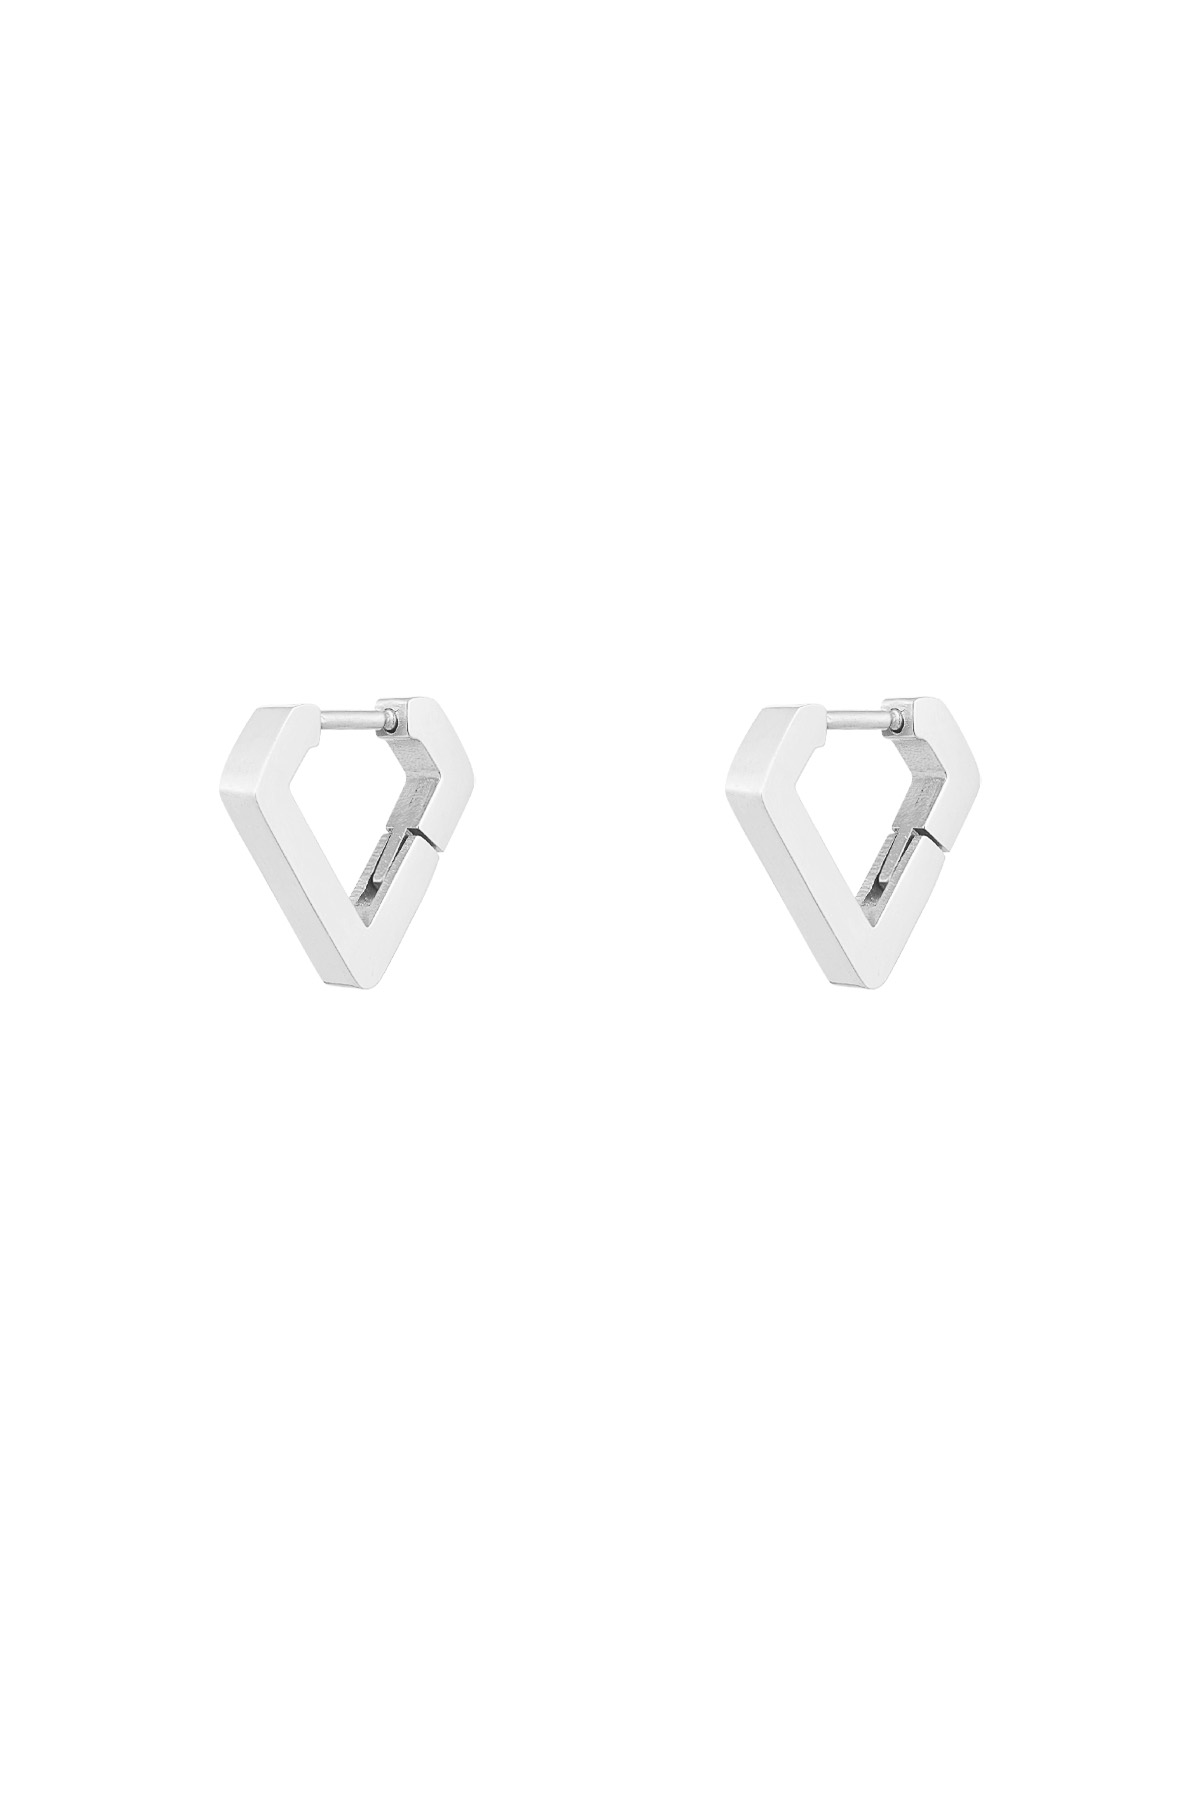 Diamond shape earrings small - silver h5 